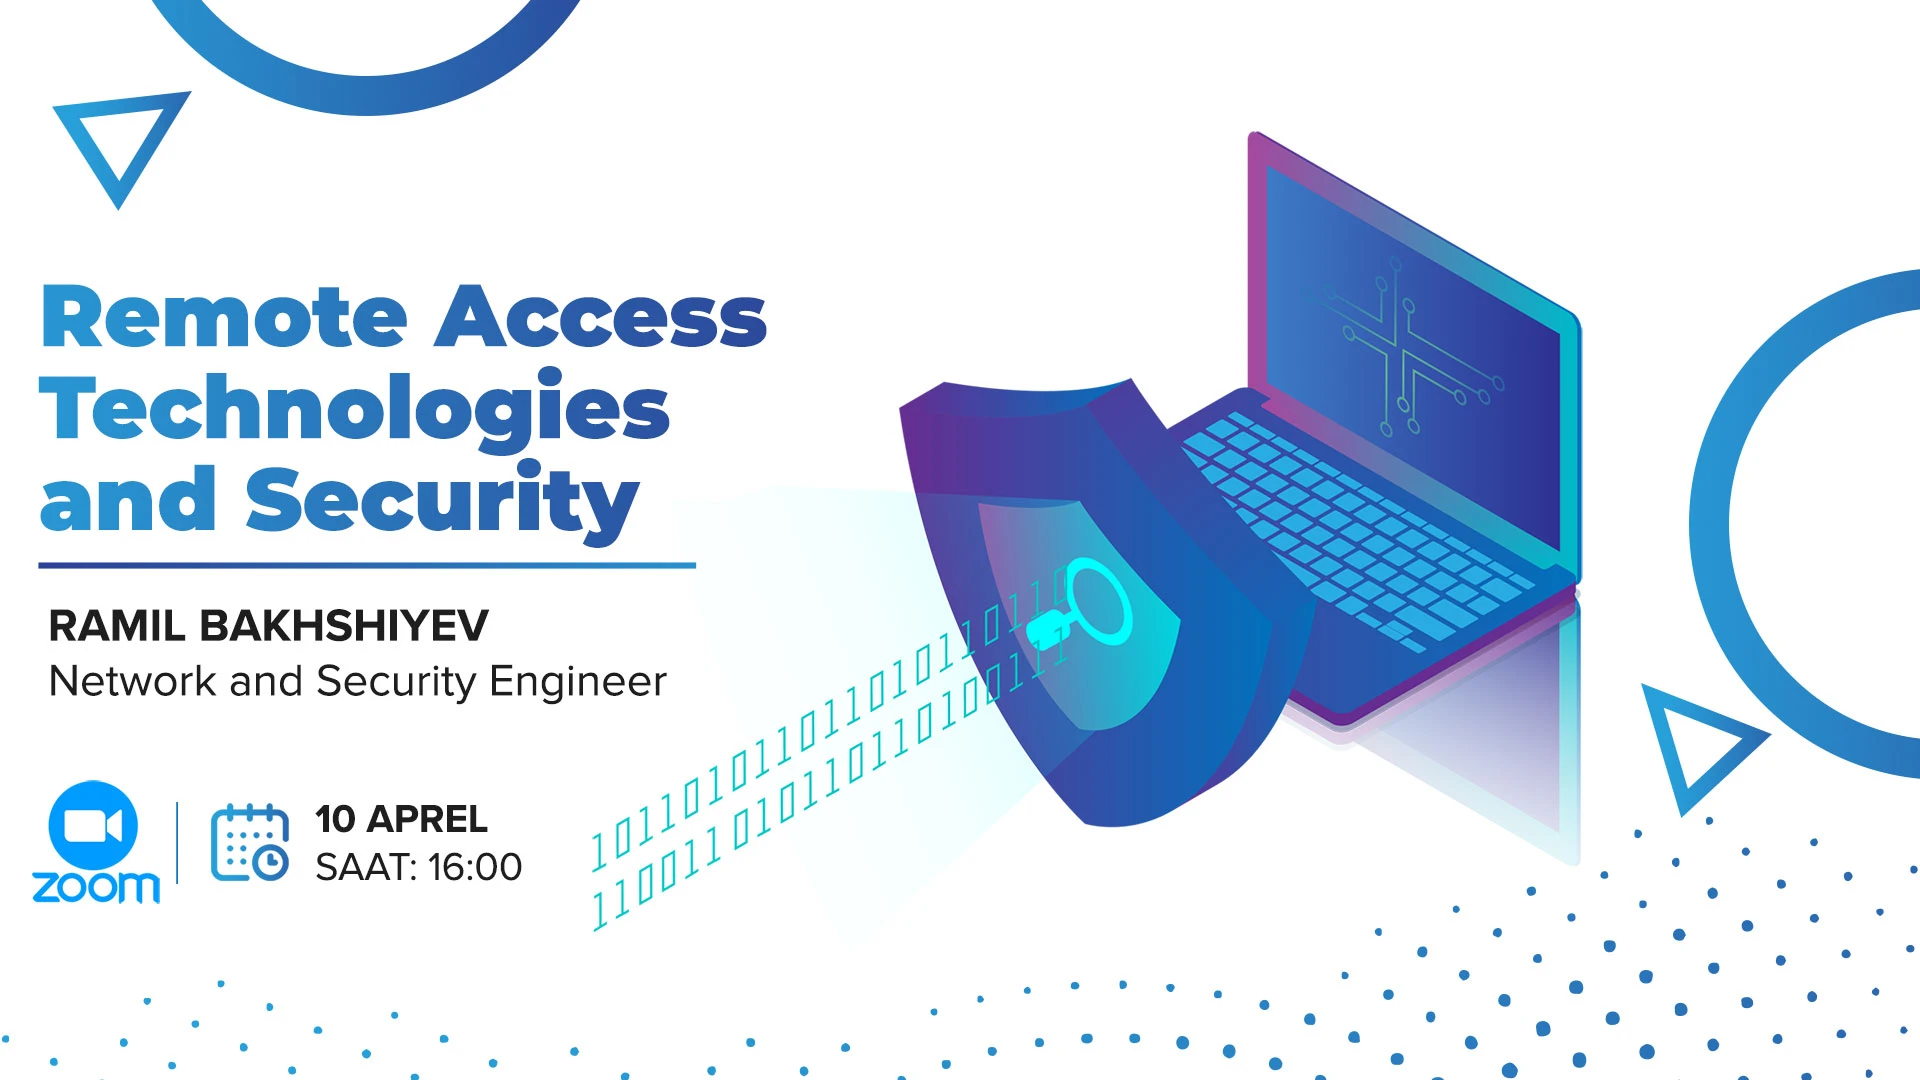 Remote access technologies and security mövzusunda vebinar